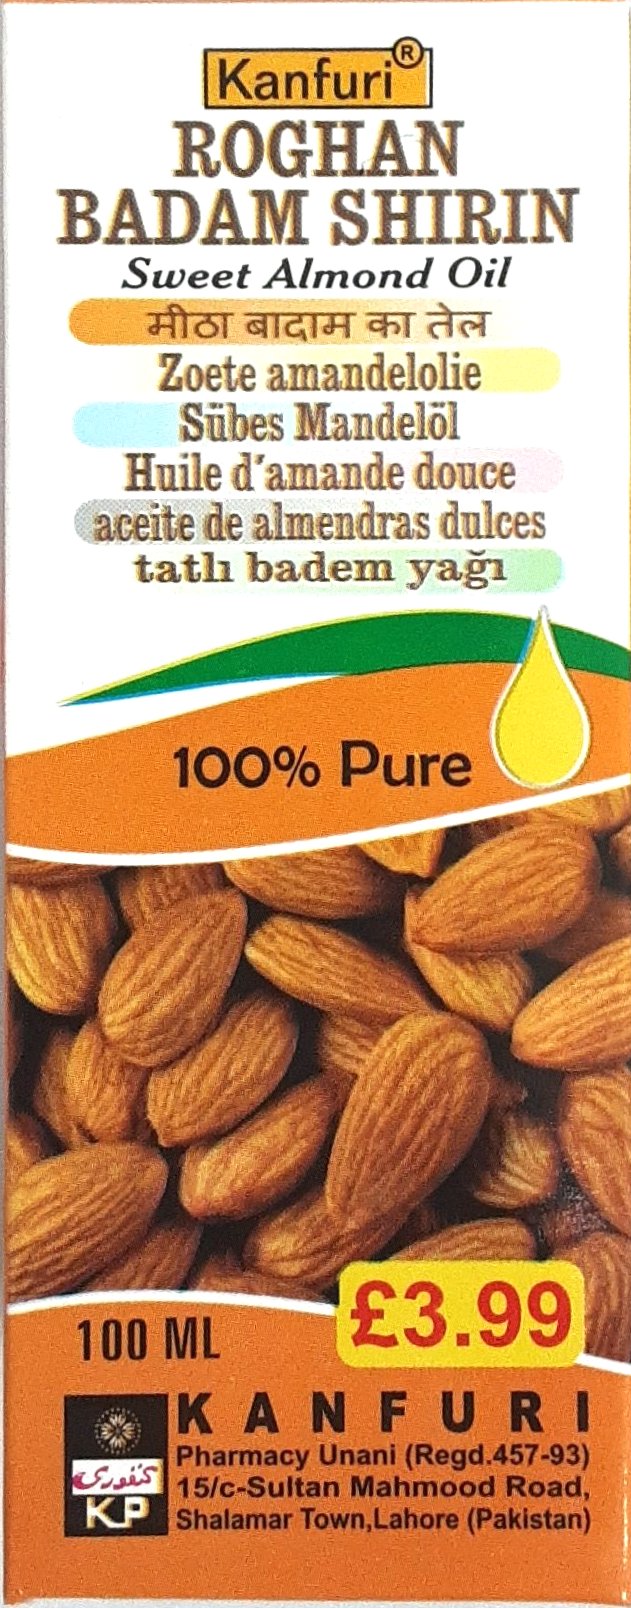 Kanfuri Rogan Badam Shirin Sweet Almond Oil 100ml PM